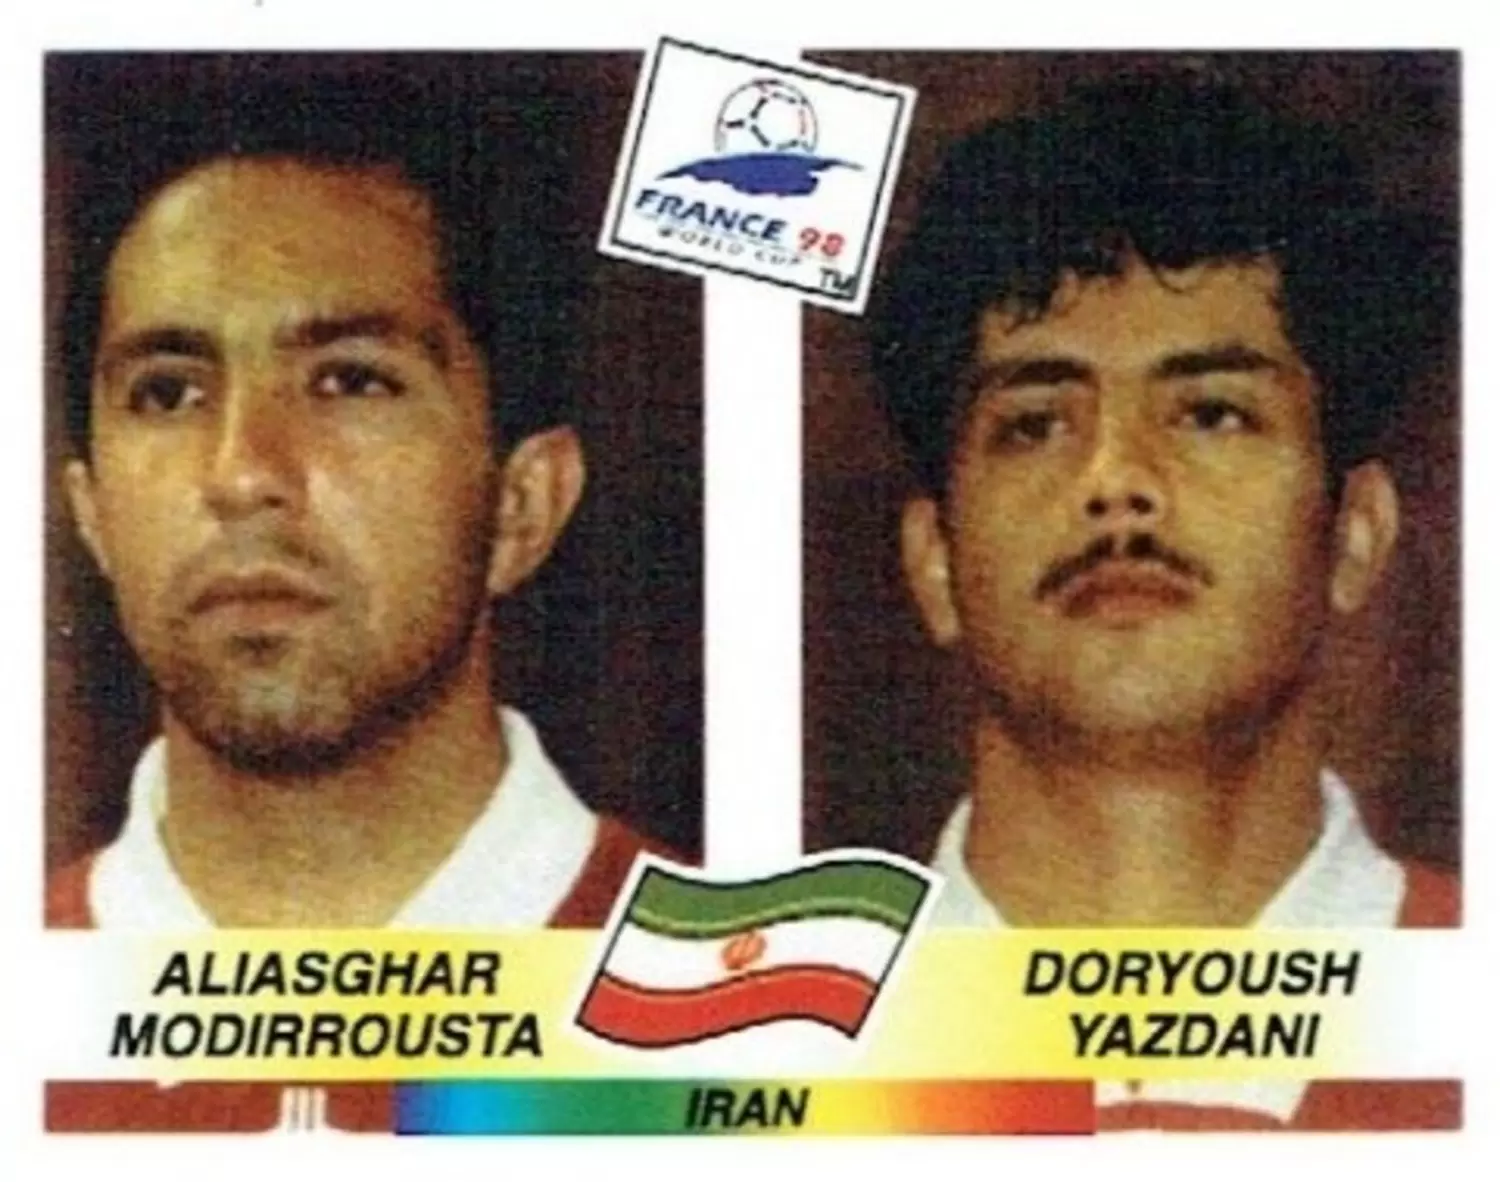 France 98 - Aliasghar Modirrousta / Doryoush Yazdani - IRN